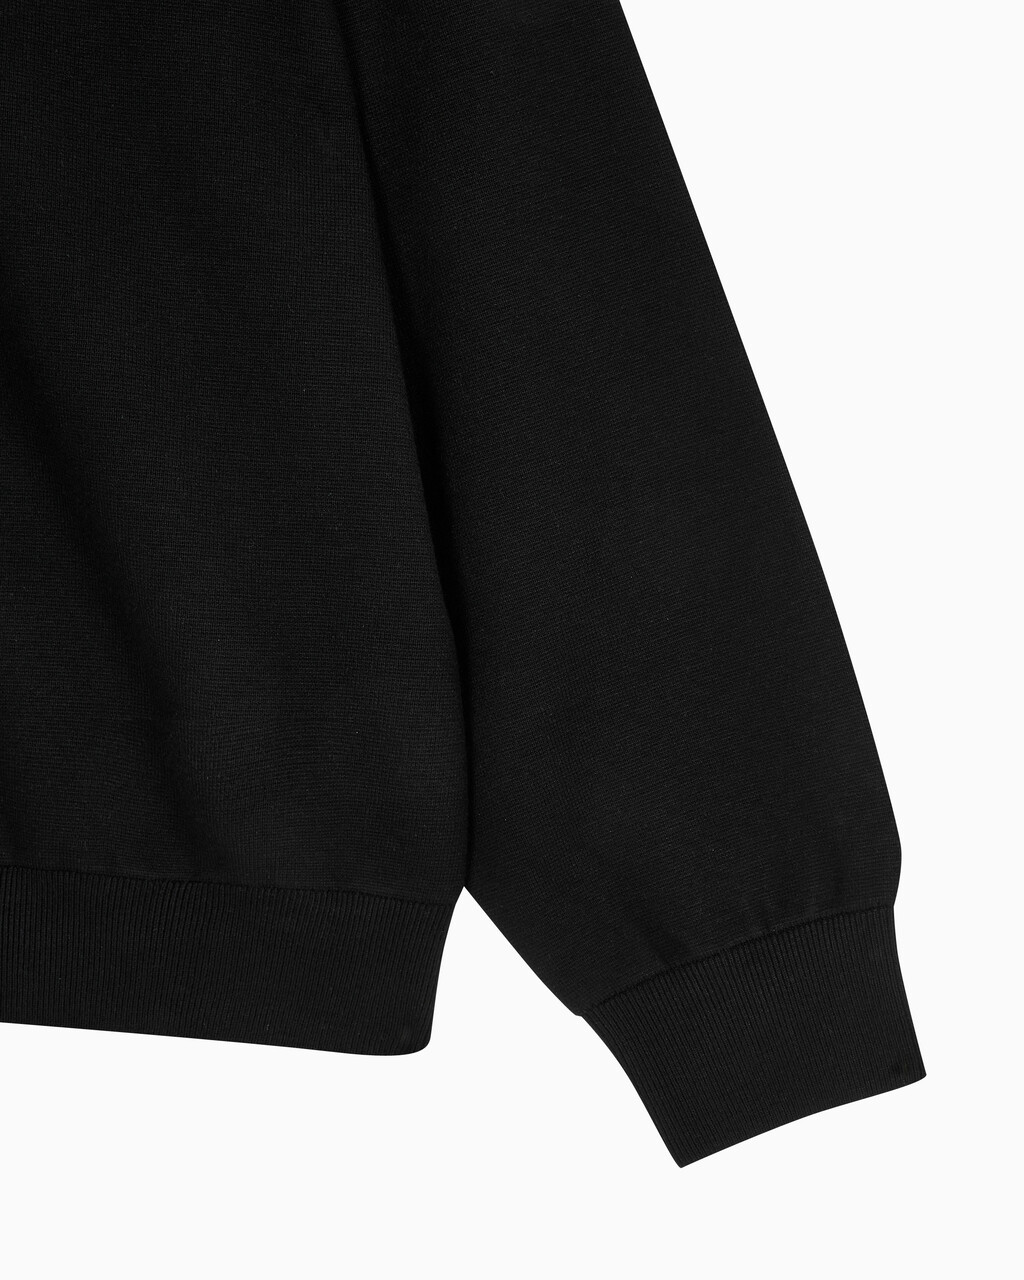 Buy 남성 스노위 테크 하프 집업 스웨터 in color BLACK